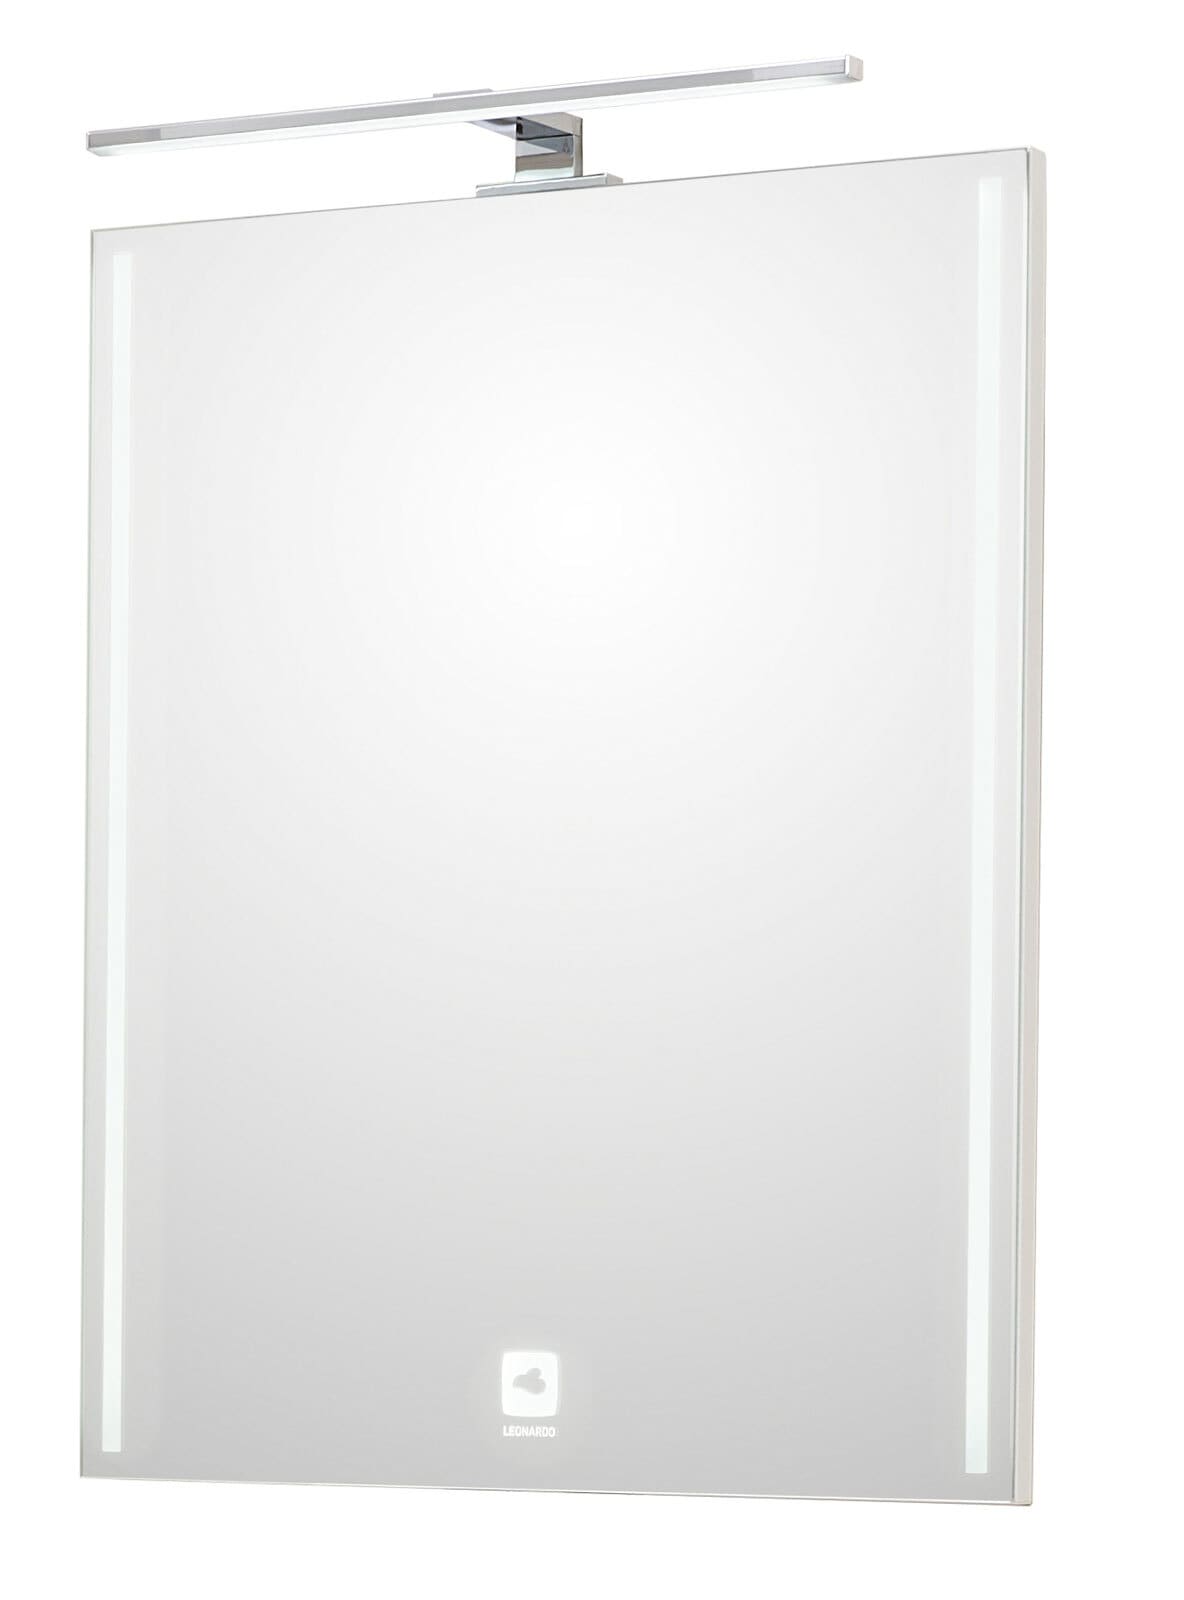 LEONARDO Flächenspiegel 50 x 60 cm